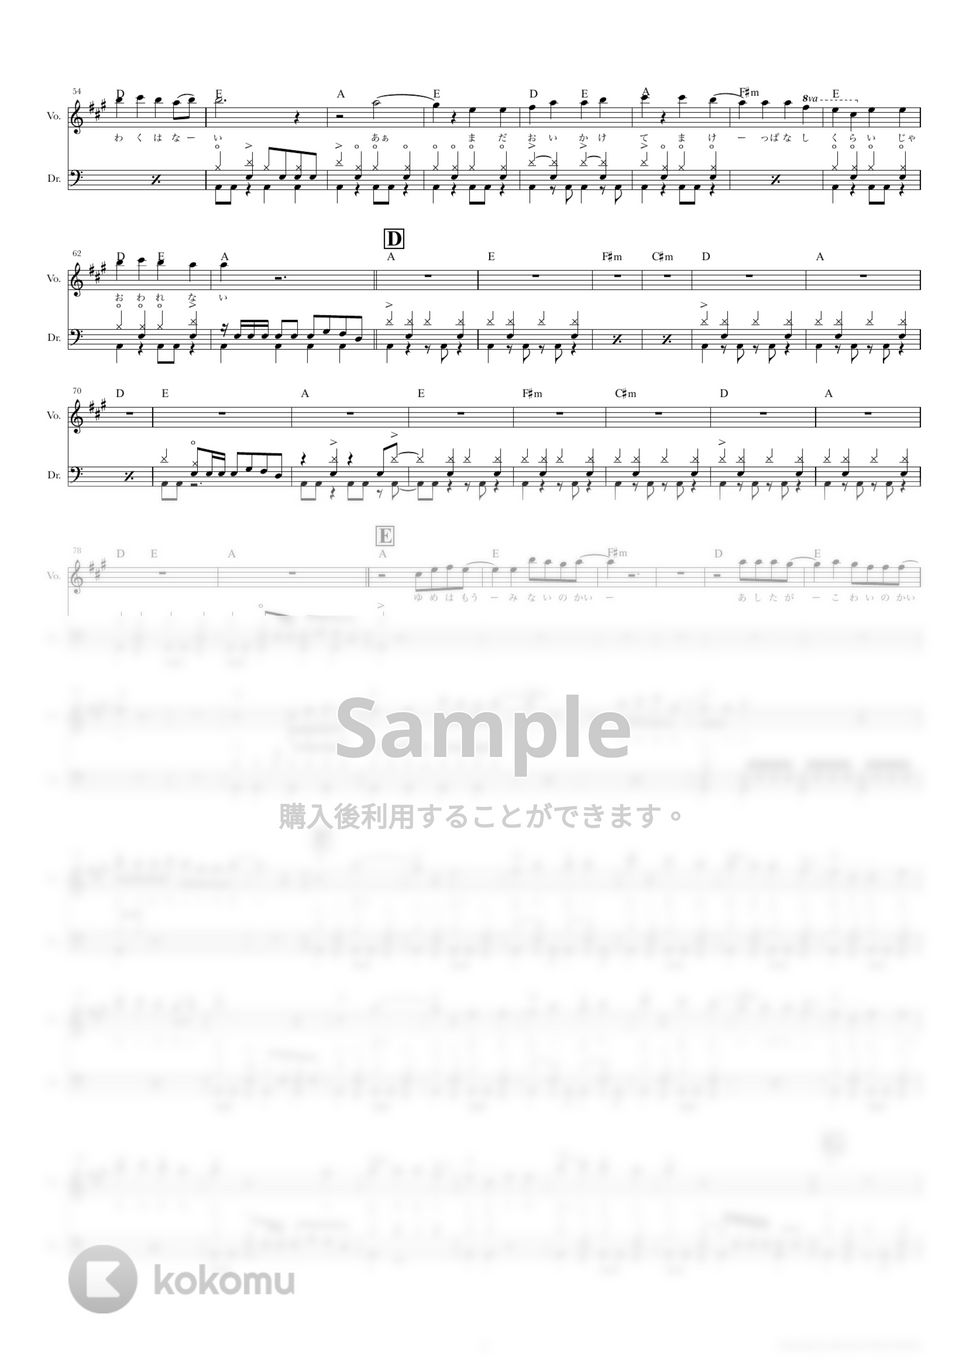 Hump Back - 拝啓、少年よ (ドラムスコア・歌詞・コード付き) by TRIAD GUITAR SCHOOL